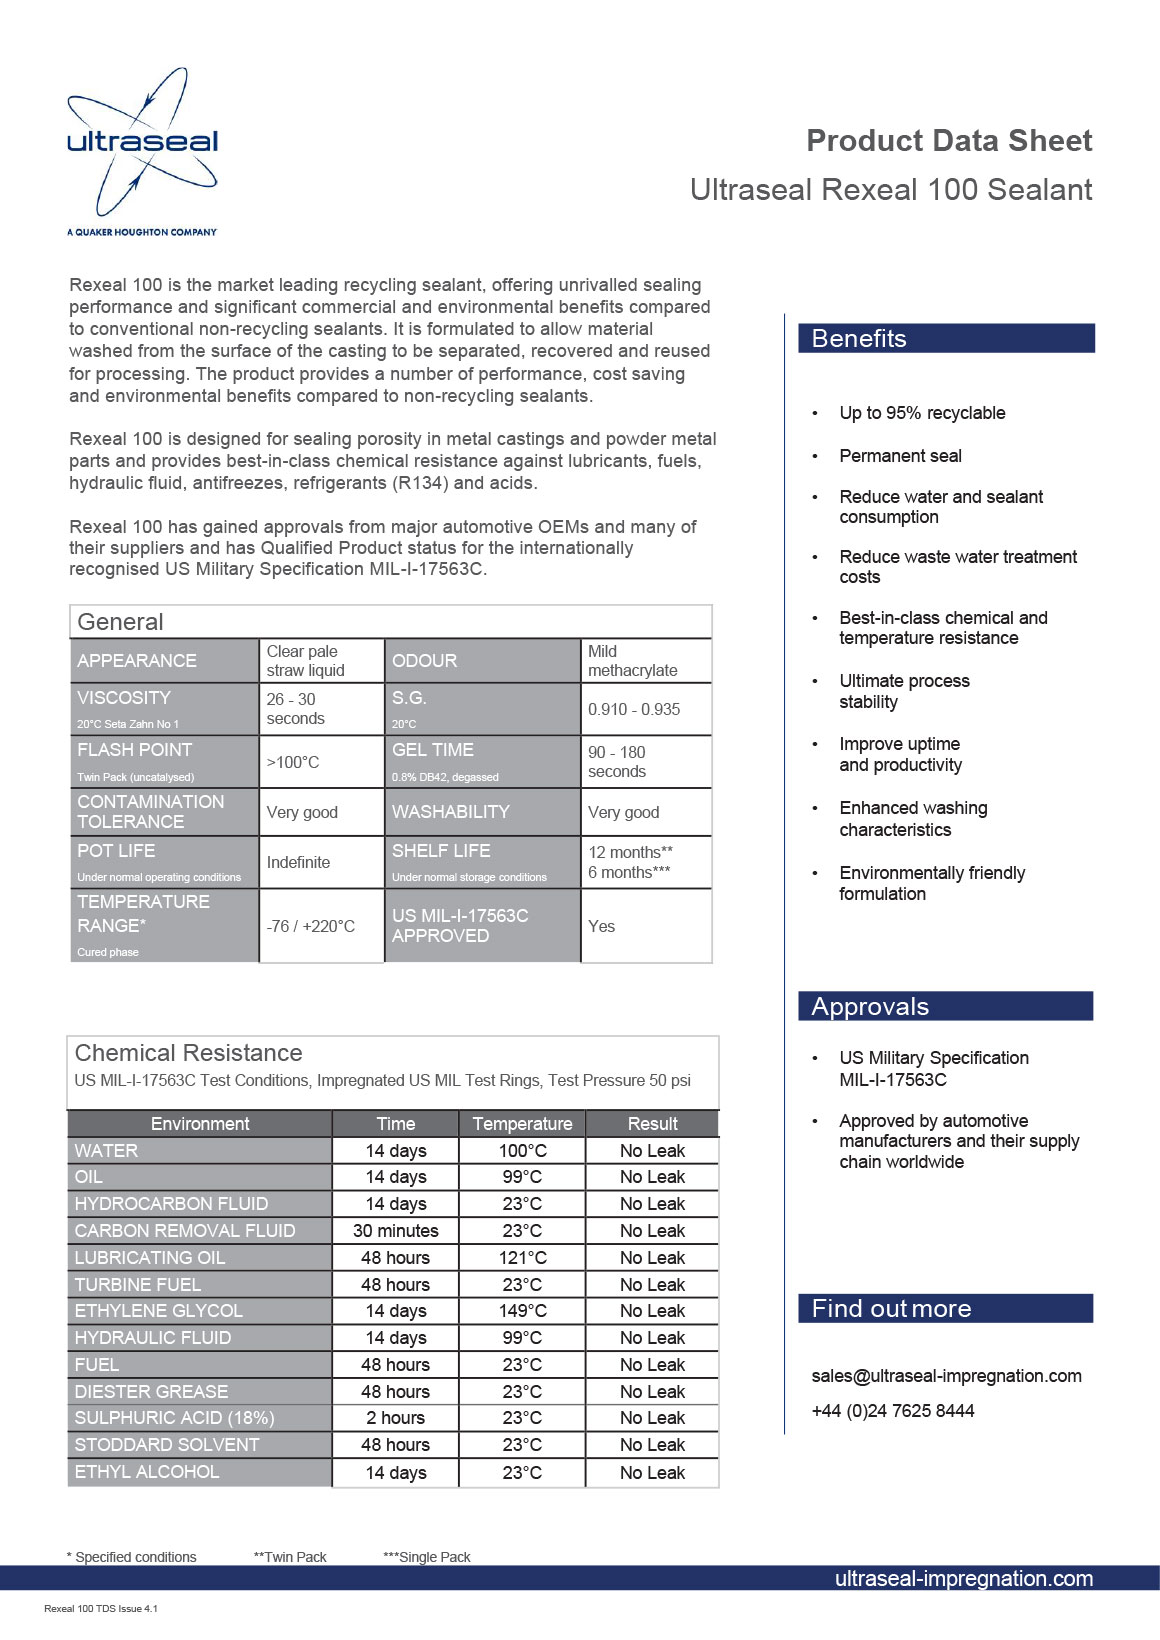 Rexeal 100 Data Sheet - whitepaper cover